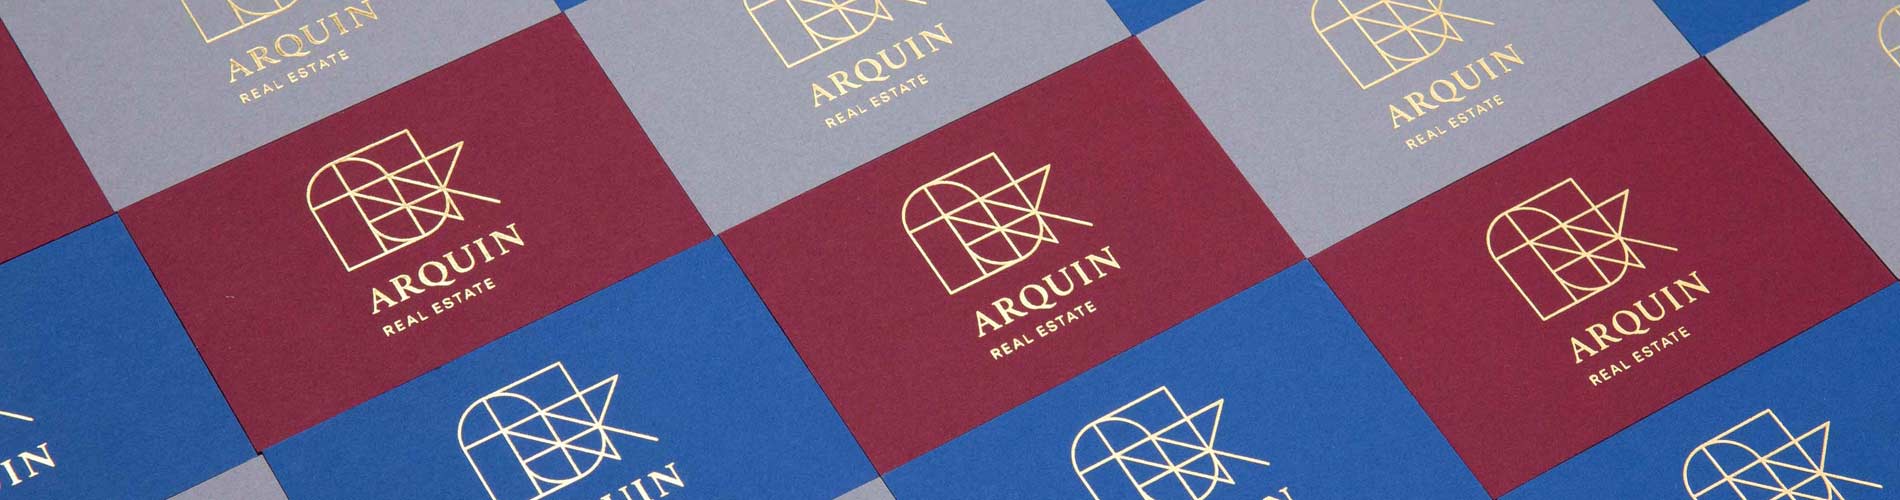 Arquin-07-480x266.jpg